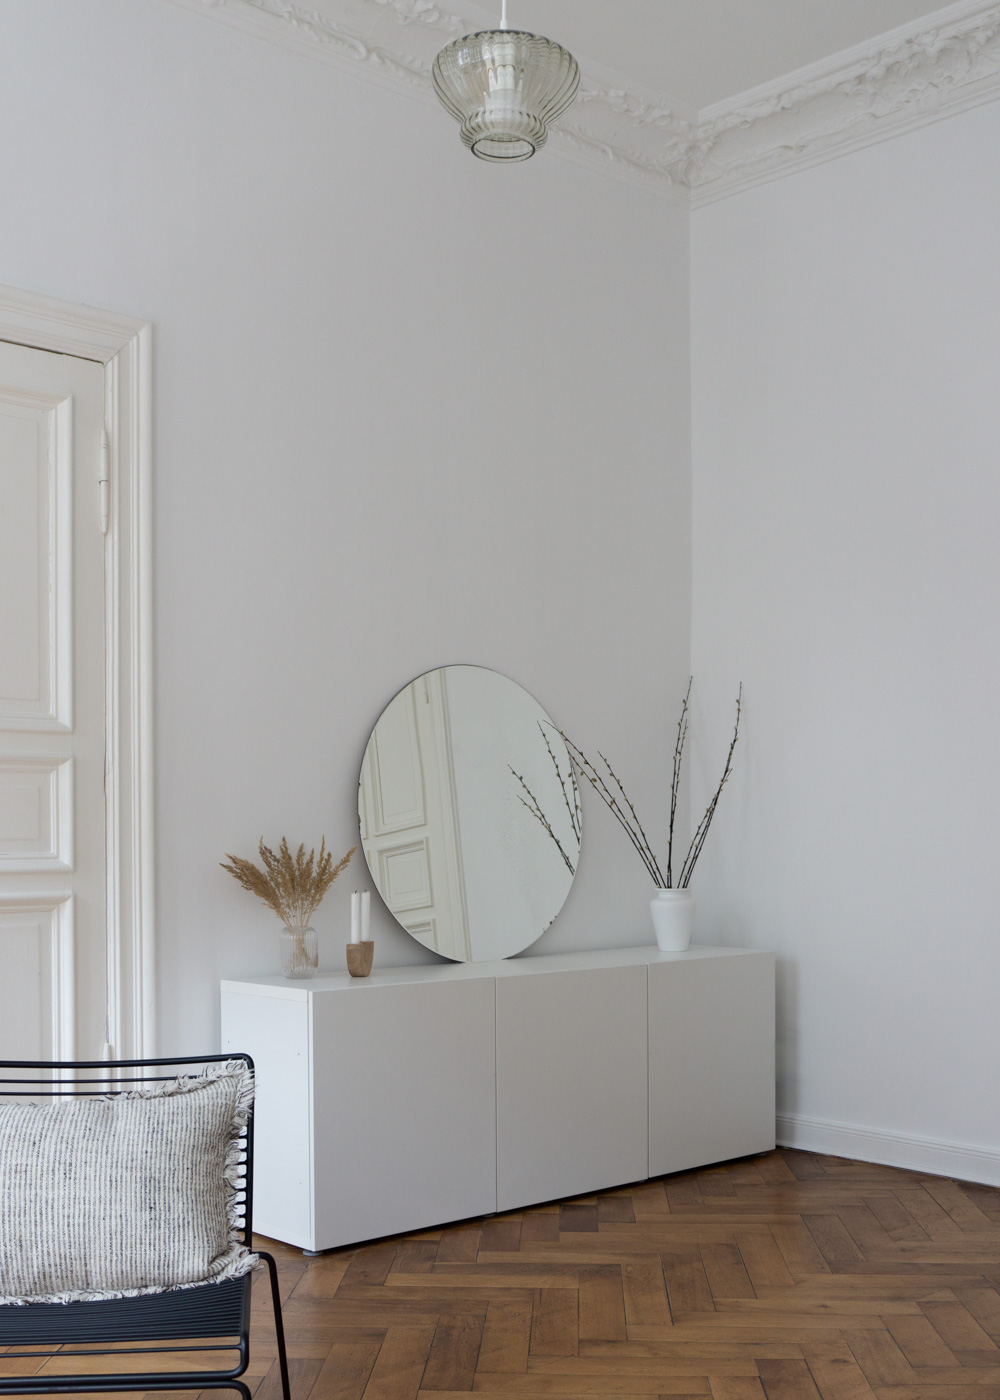 Round Mirror | neutral interior, white and beige home, wood floors, minimalist simple decor, natural berlin apartment, scandinavian design, calm aesthetic